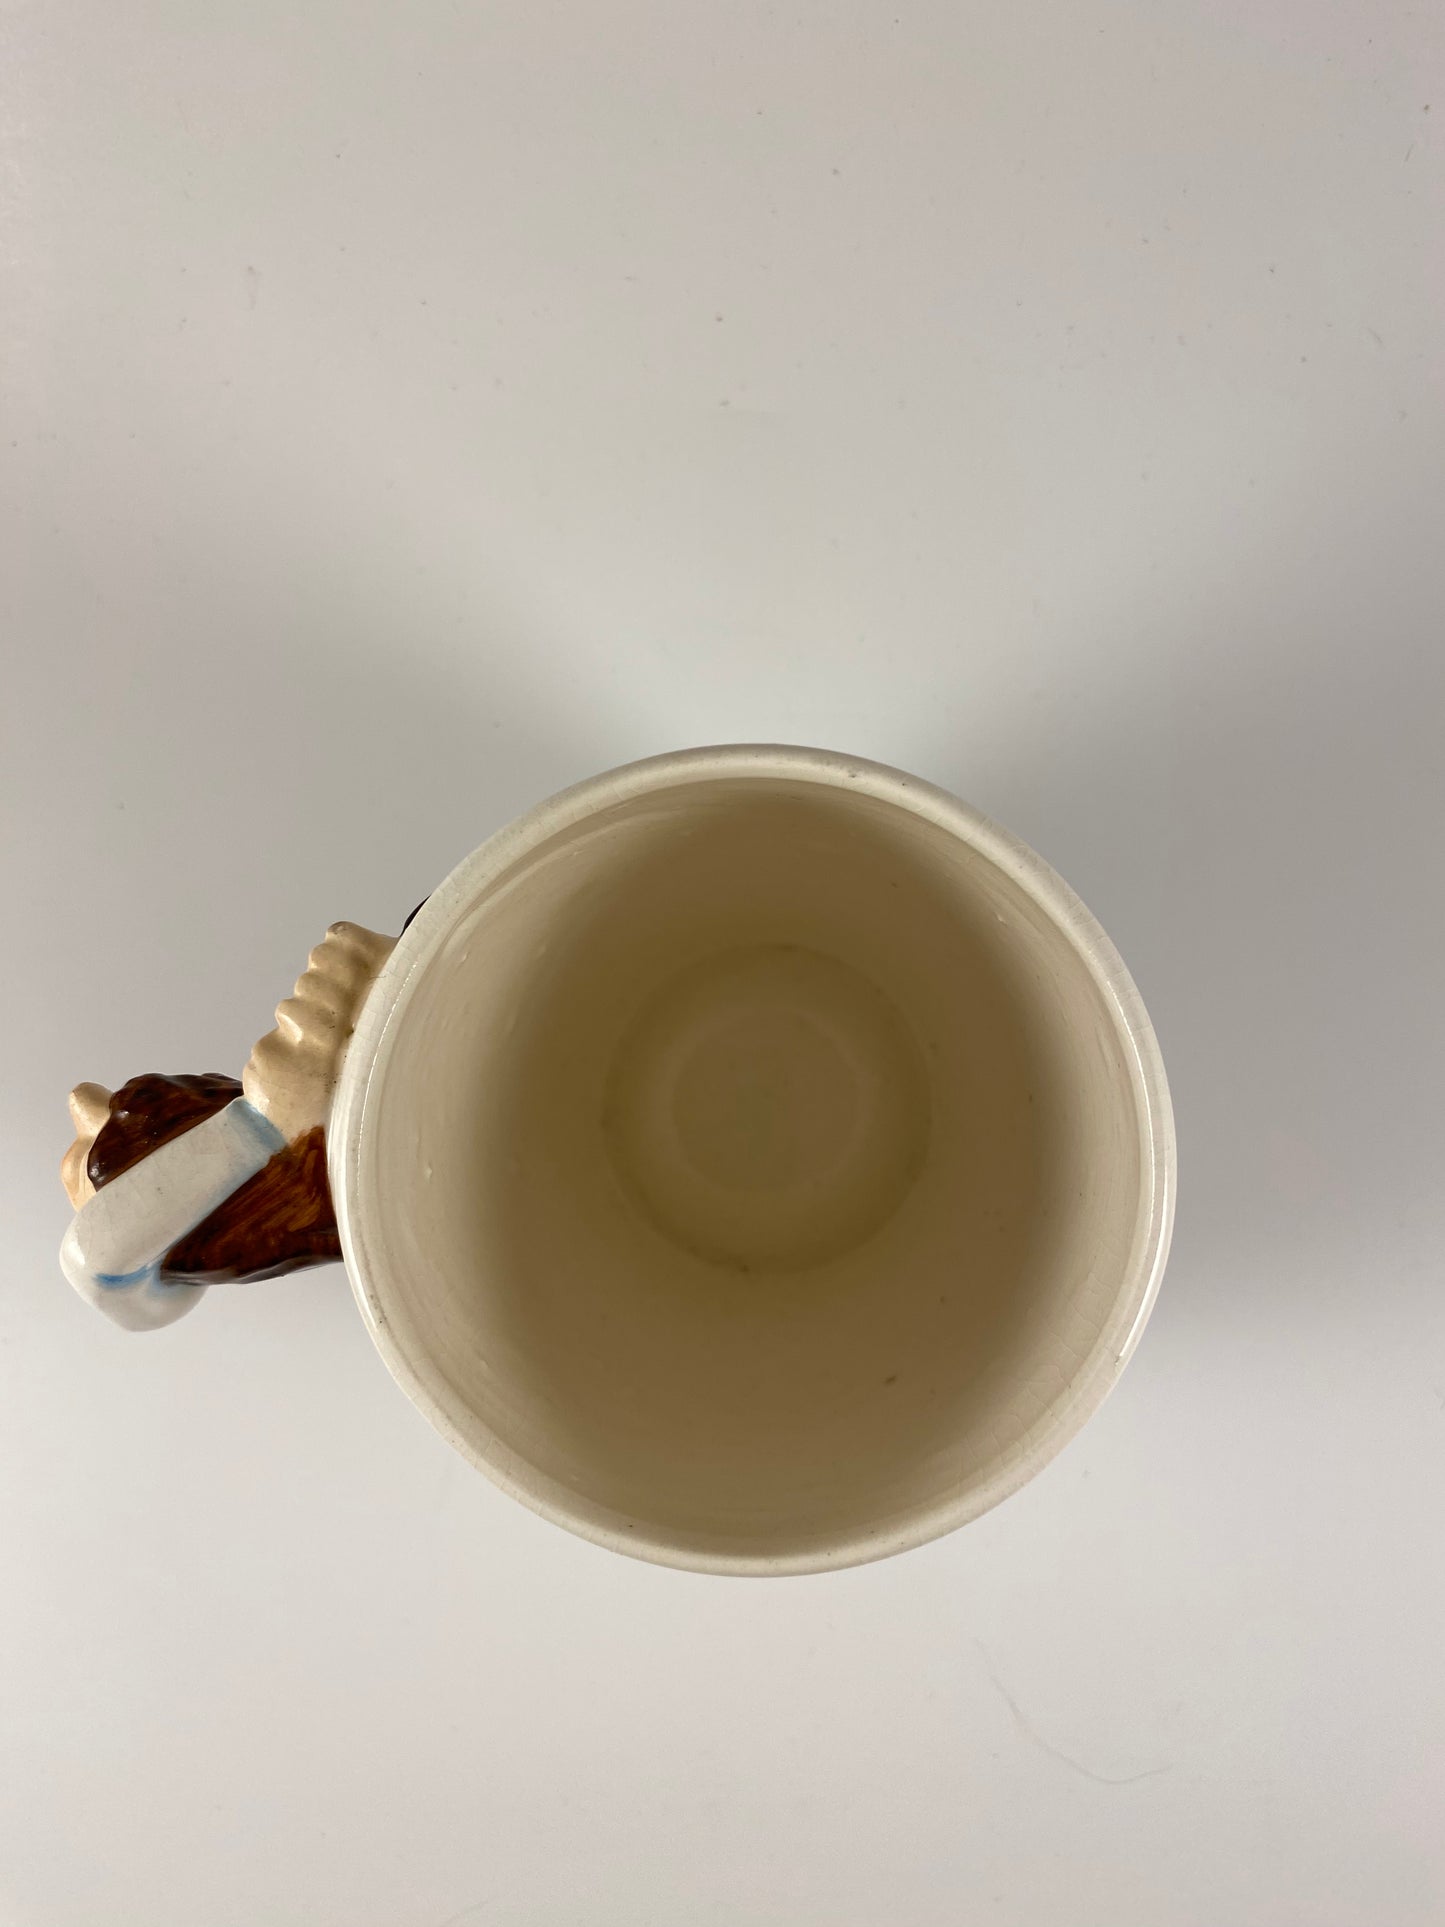 Vintage World’s Greatest Fisherman Mug Made in Japan